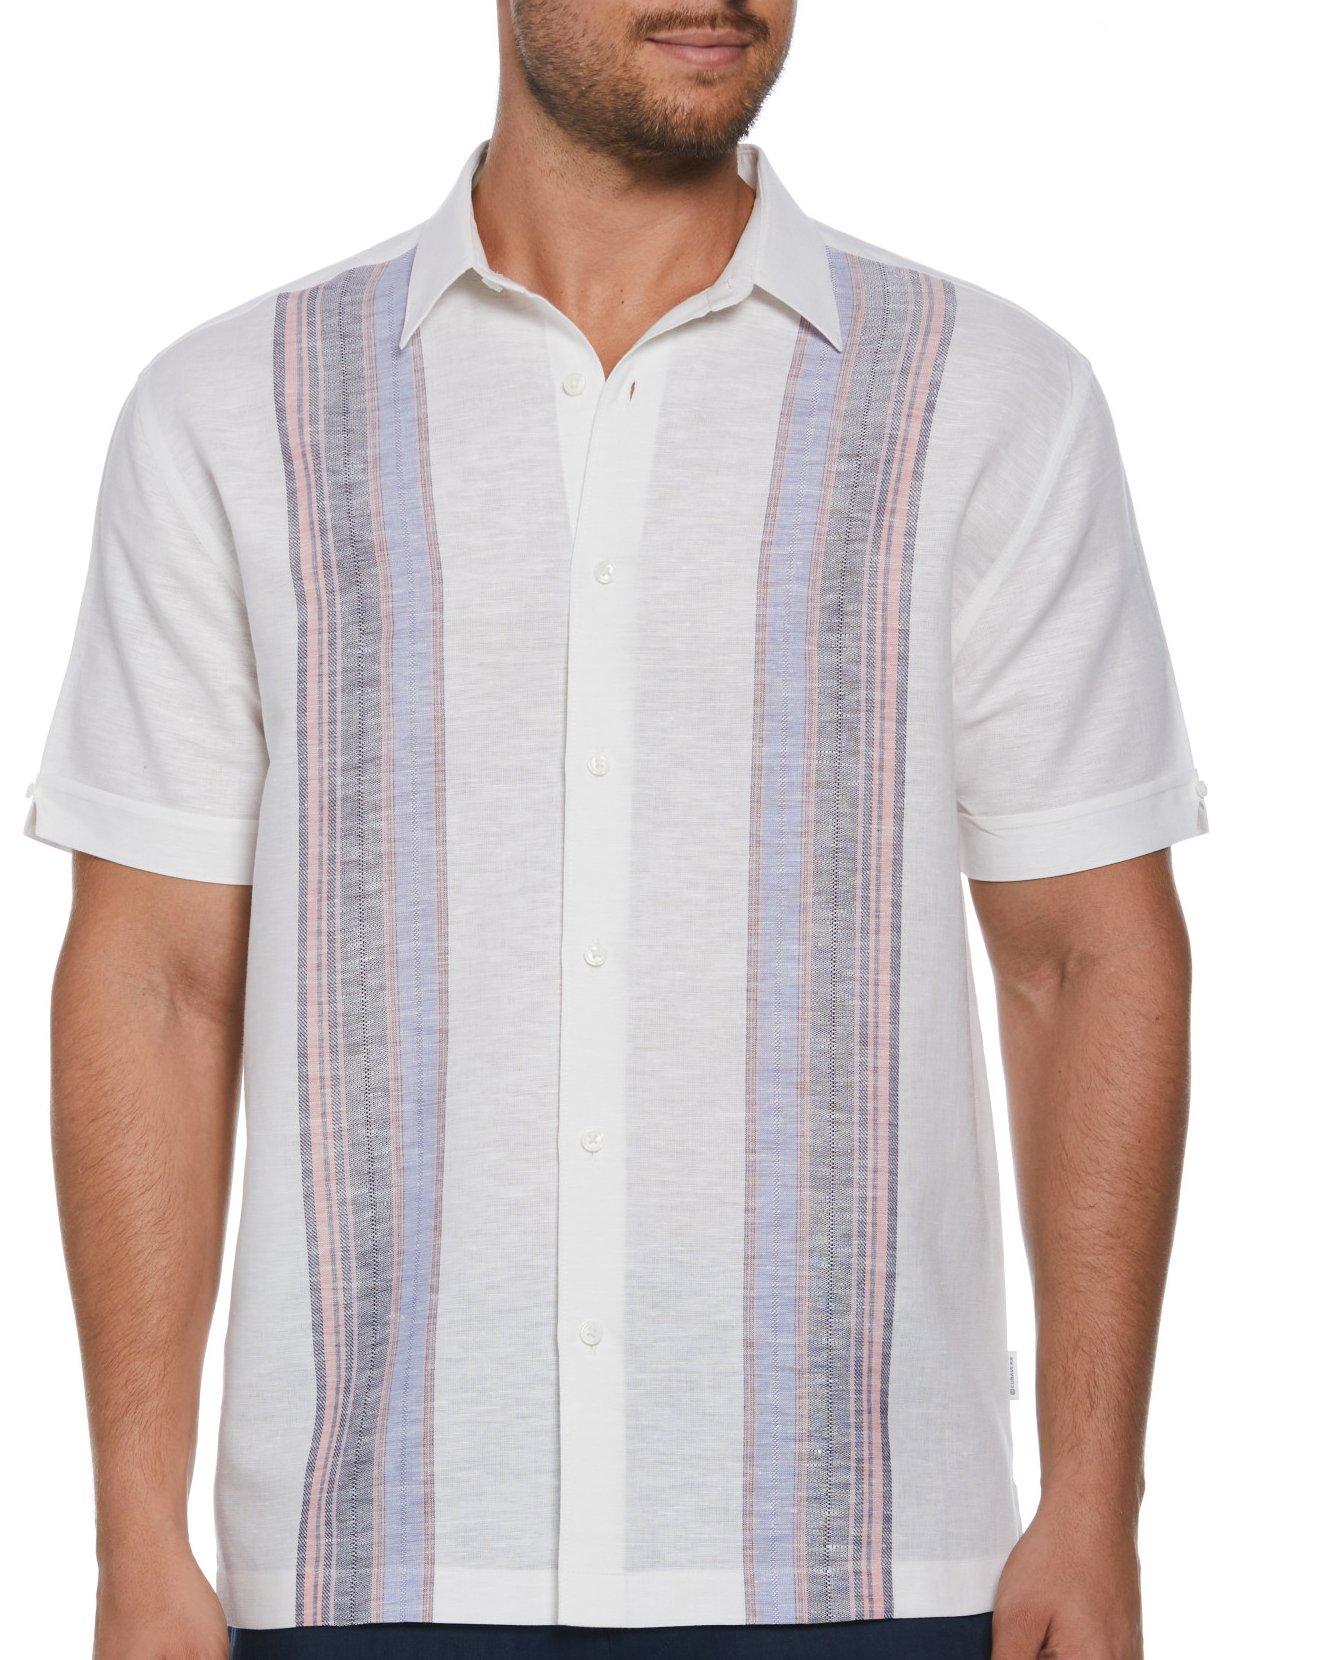 Mens Yarn Dye Panel Woven Short Sleeve Button Up Shirt